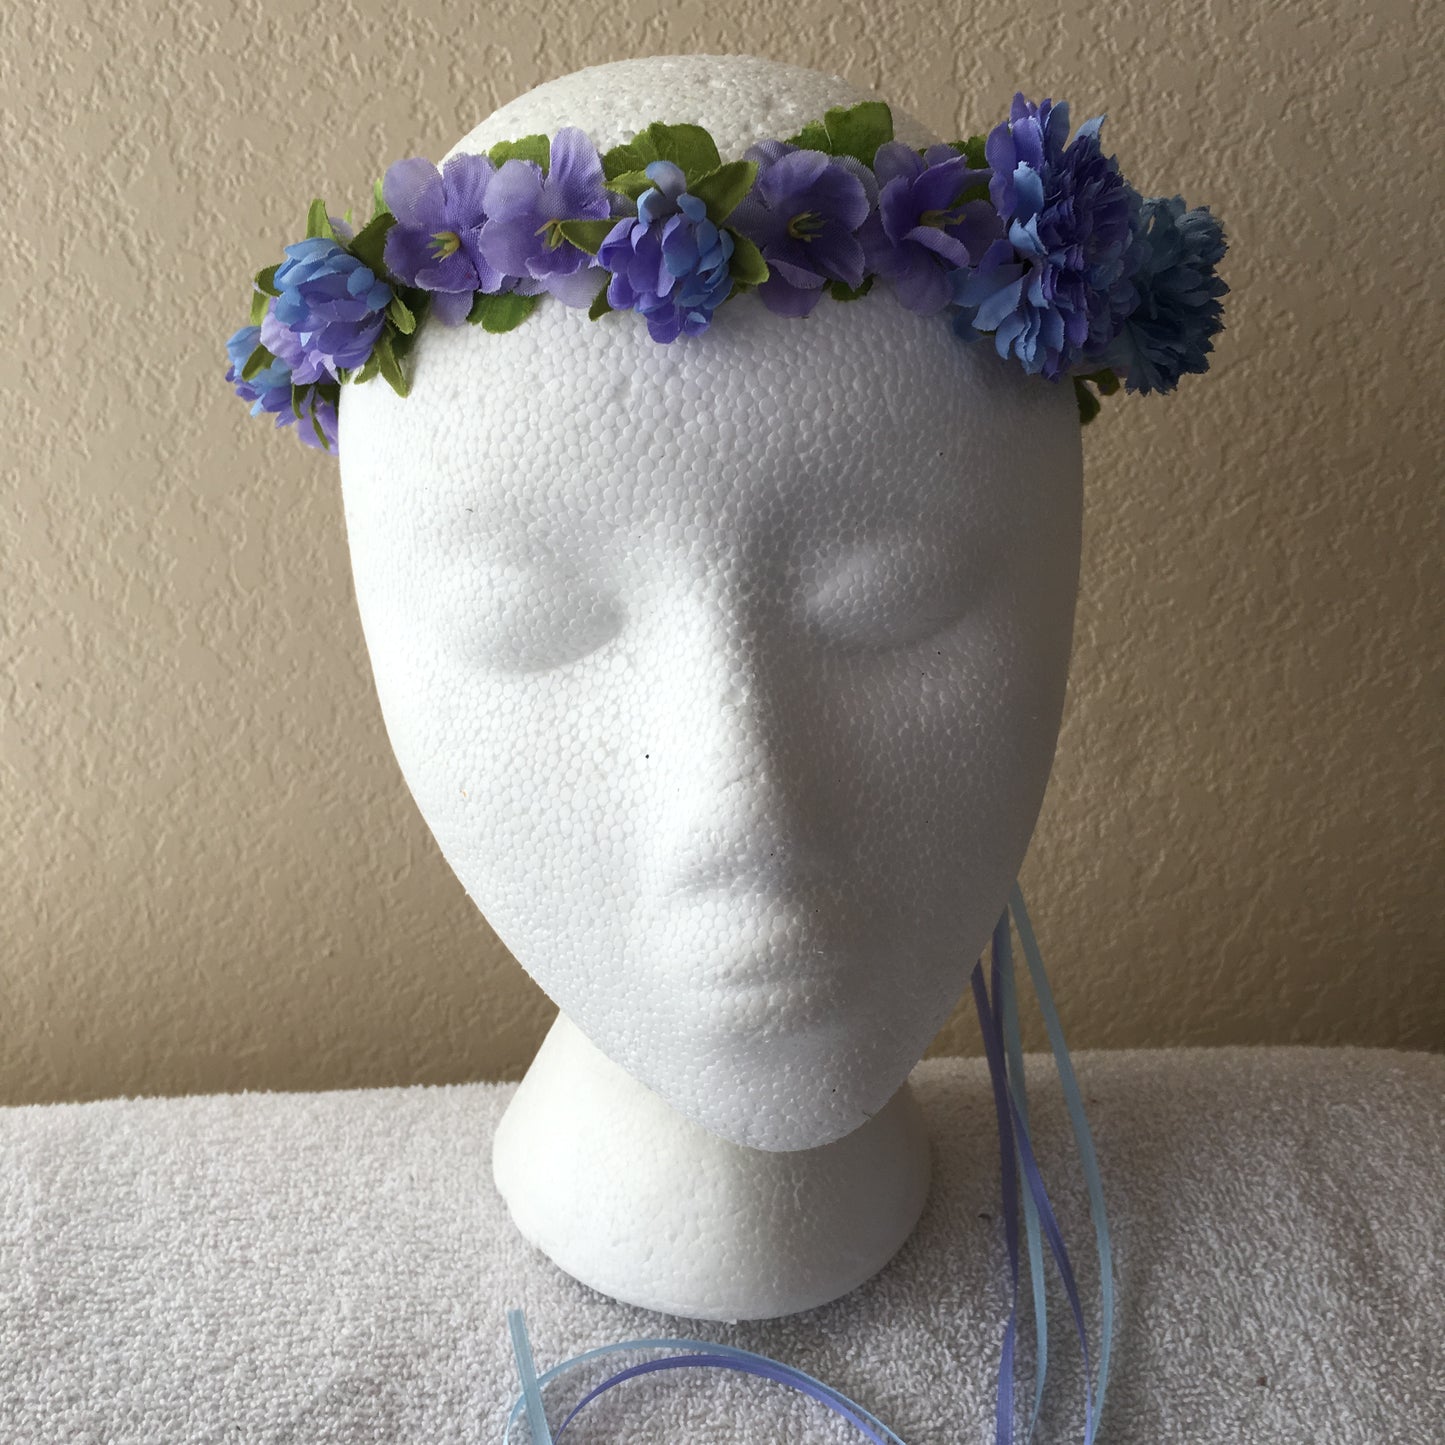 Extra Small Wreath - Blue and purple flowers w/ pom poms